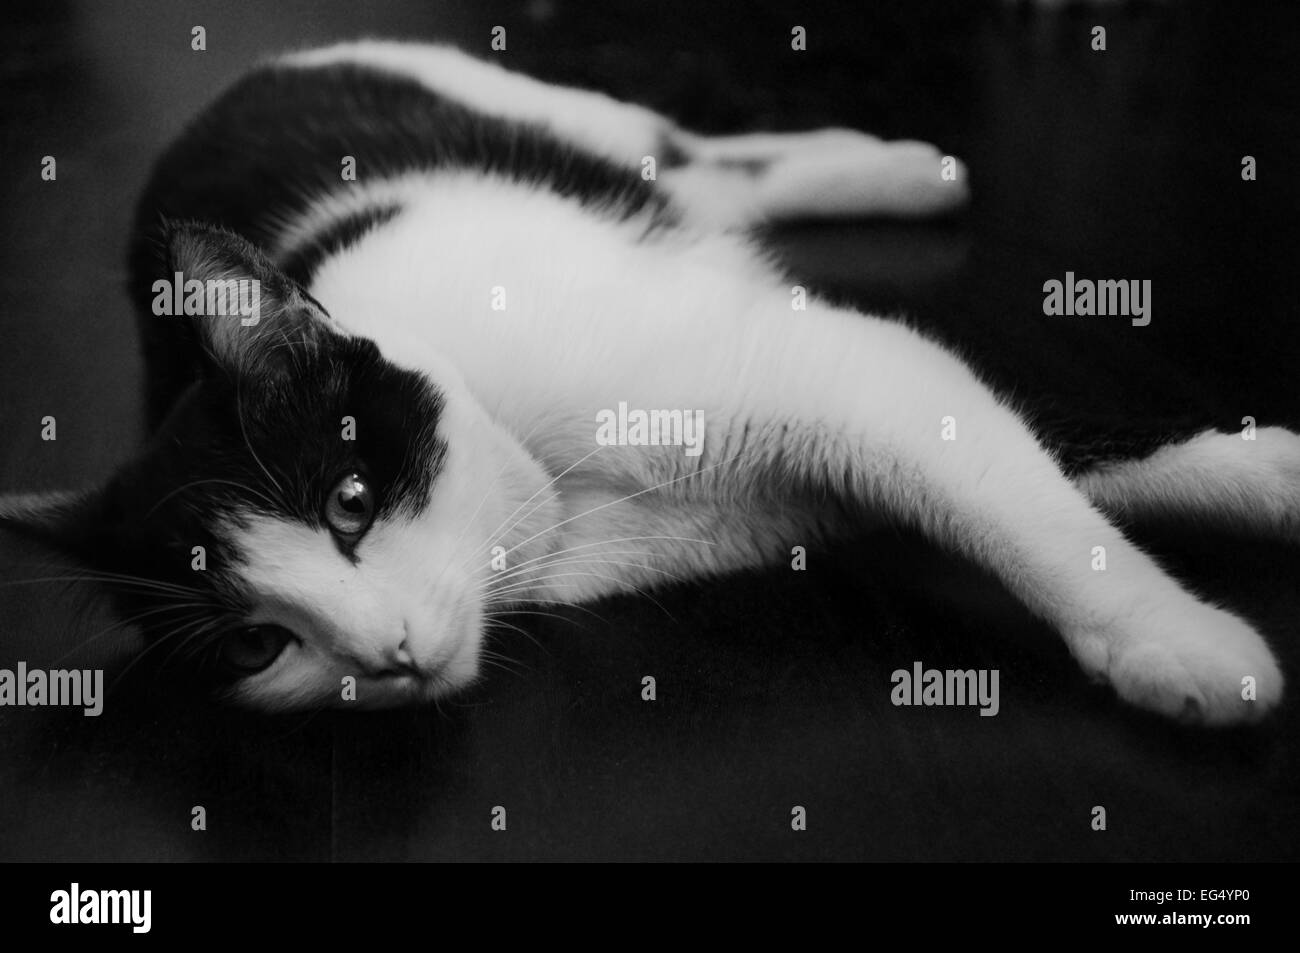 cat, animal, nature, black and white, eyes, nose. lying, feline, quiet, pose, mascot, domestic animal, friend, companion Stock Photo